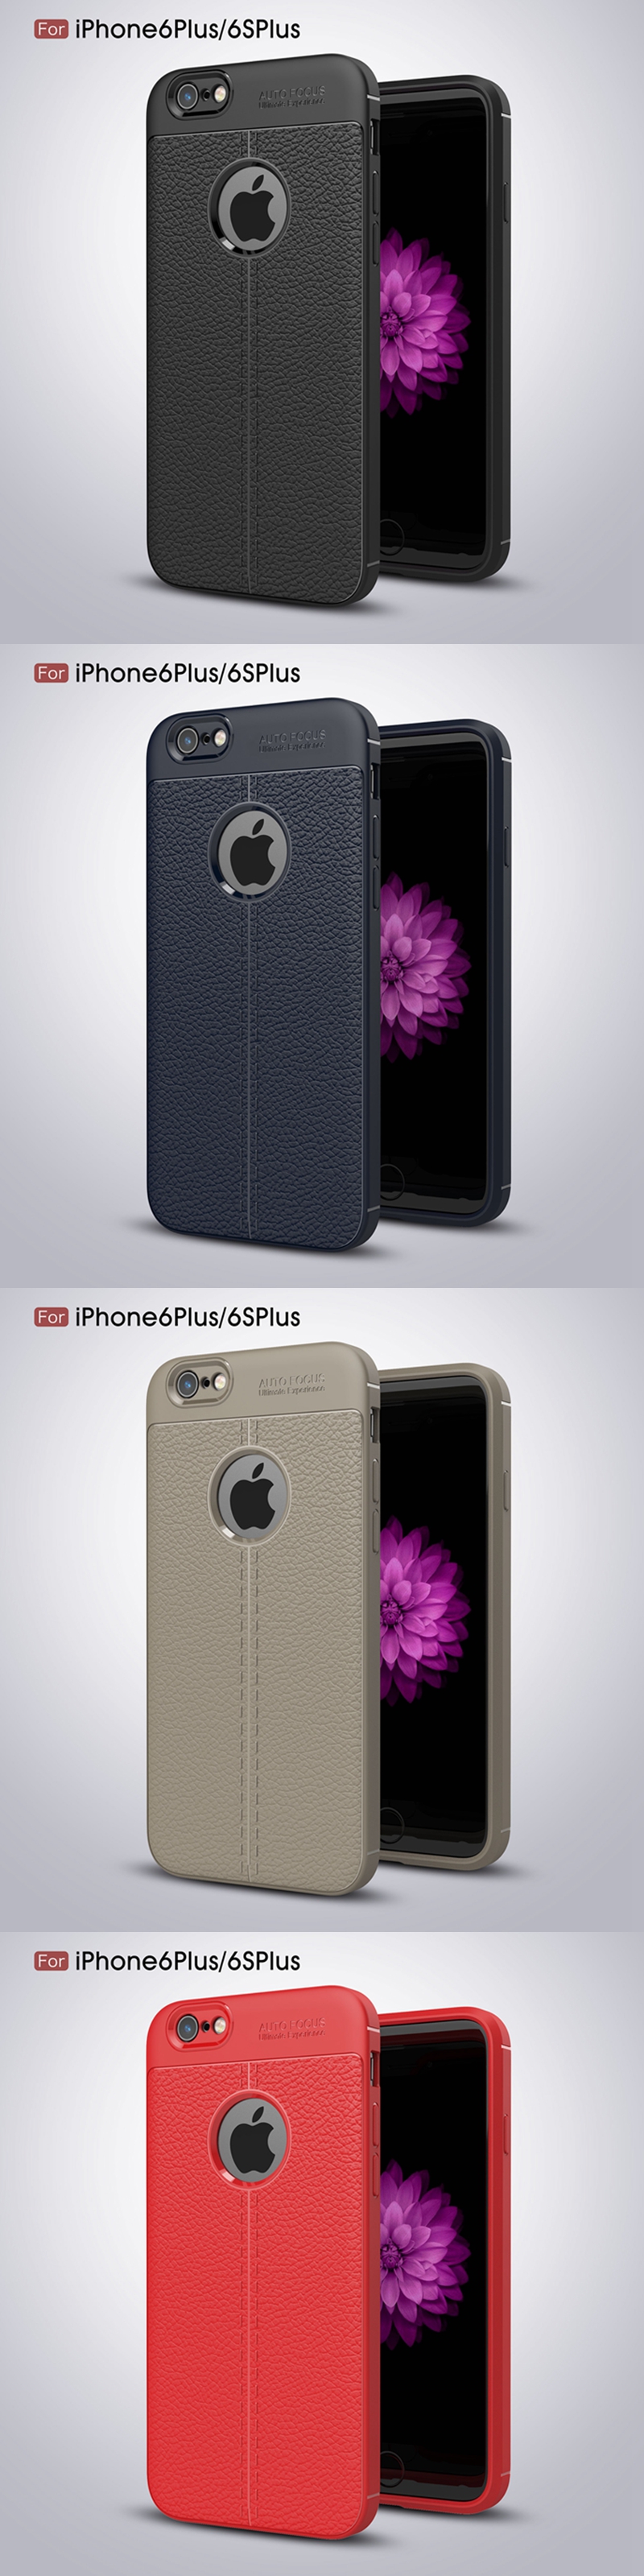 Bakeeytrade-Anti-Fingerprint-Soft-TPU-Litchi-Leather-Case-Cover-for-iPhone-X787Plus8Plus6Plus6sPlus-1203025-10